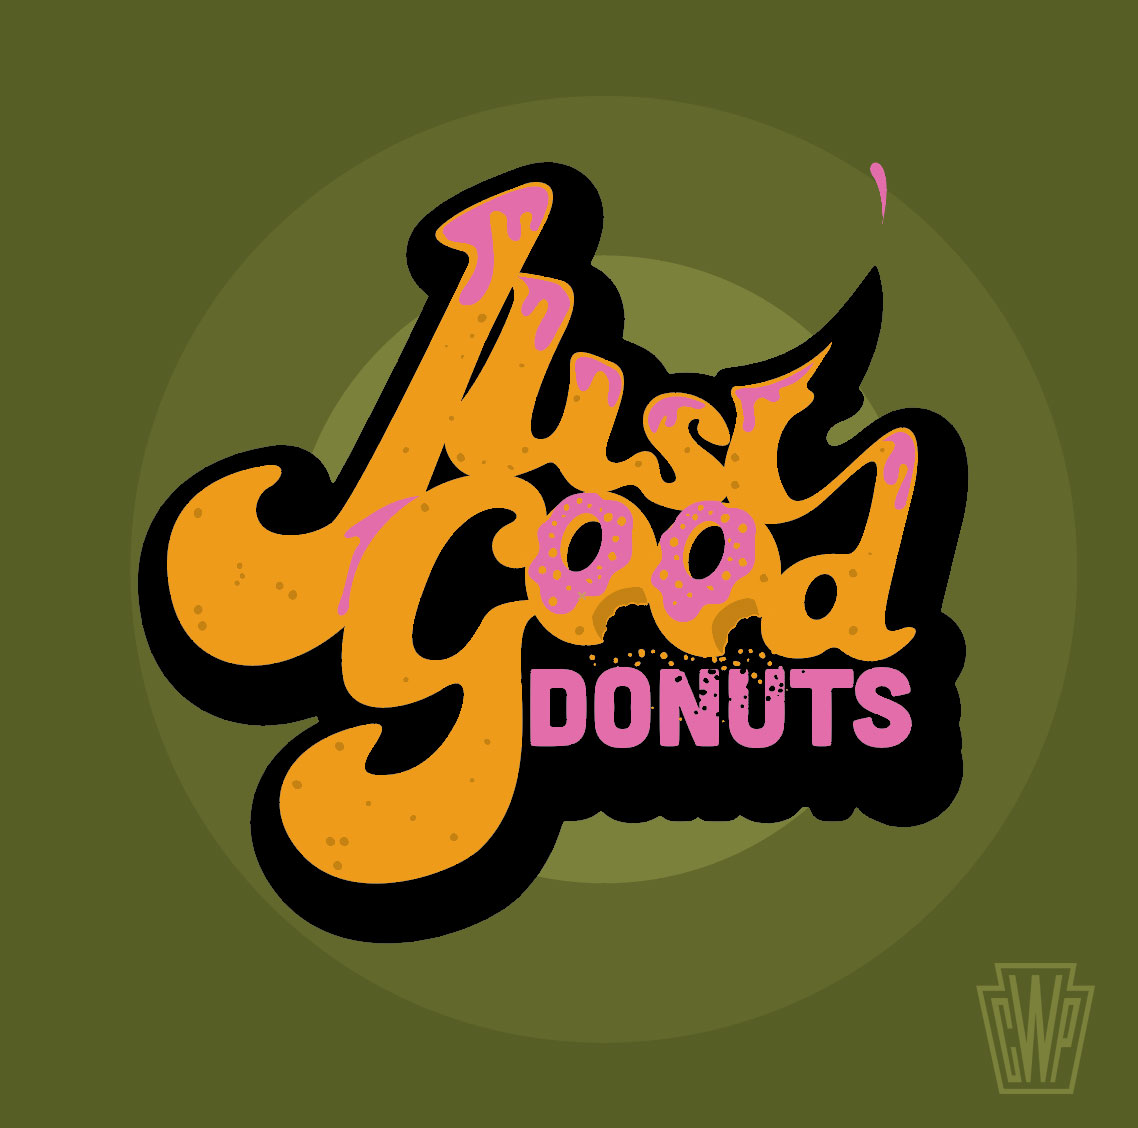 Branding a Donut shop — COMMONWEALTH PRESS